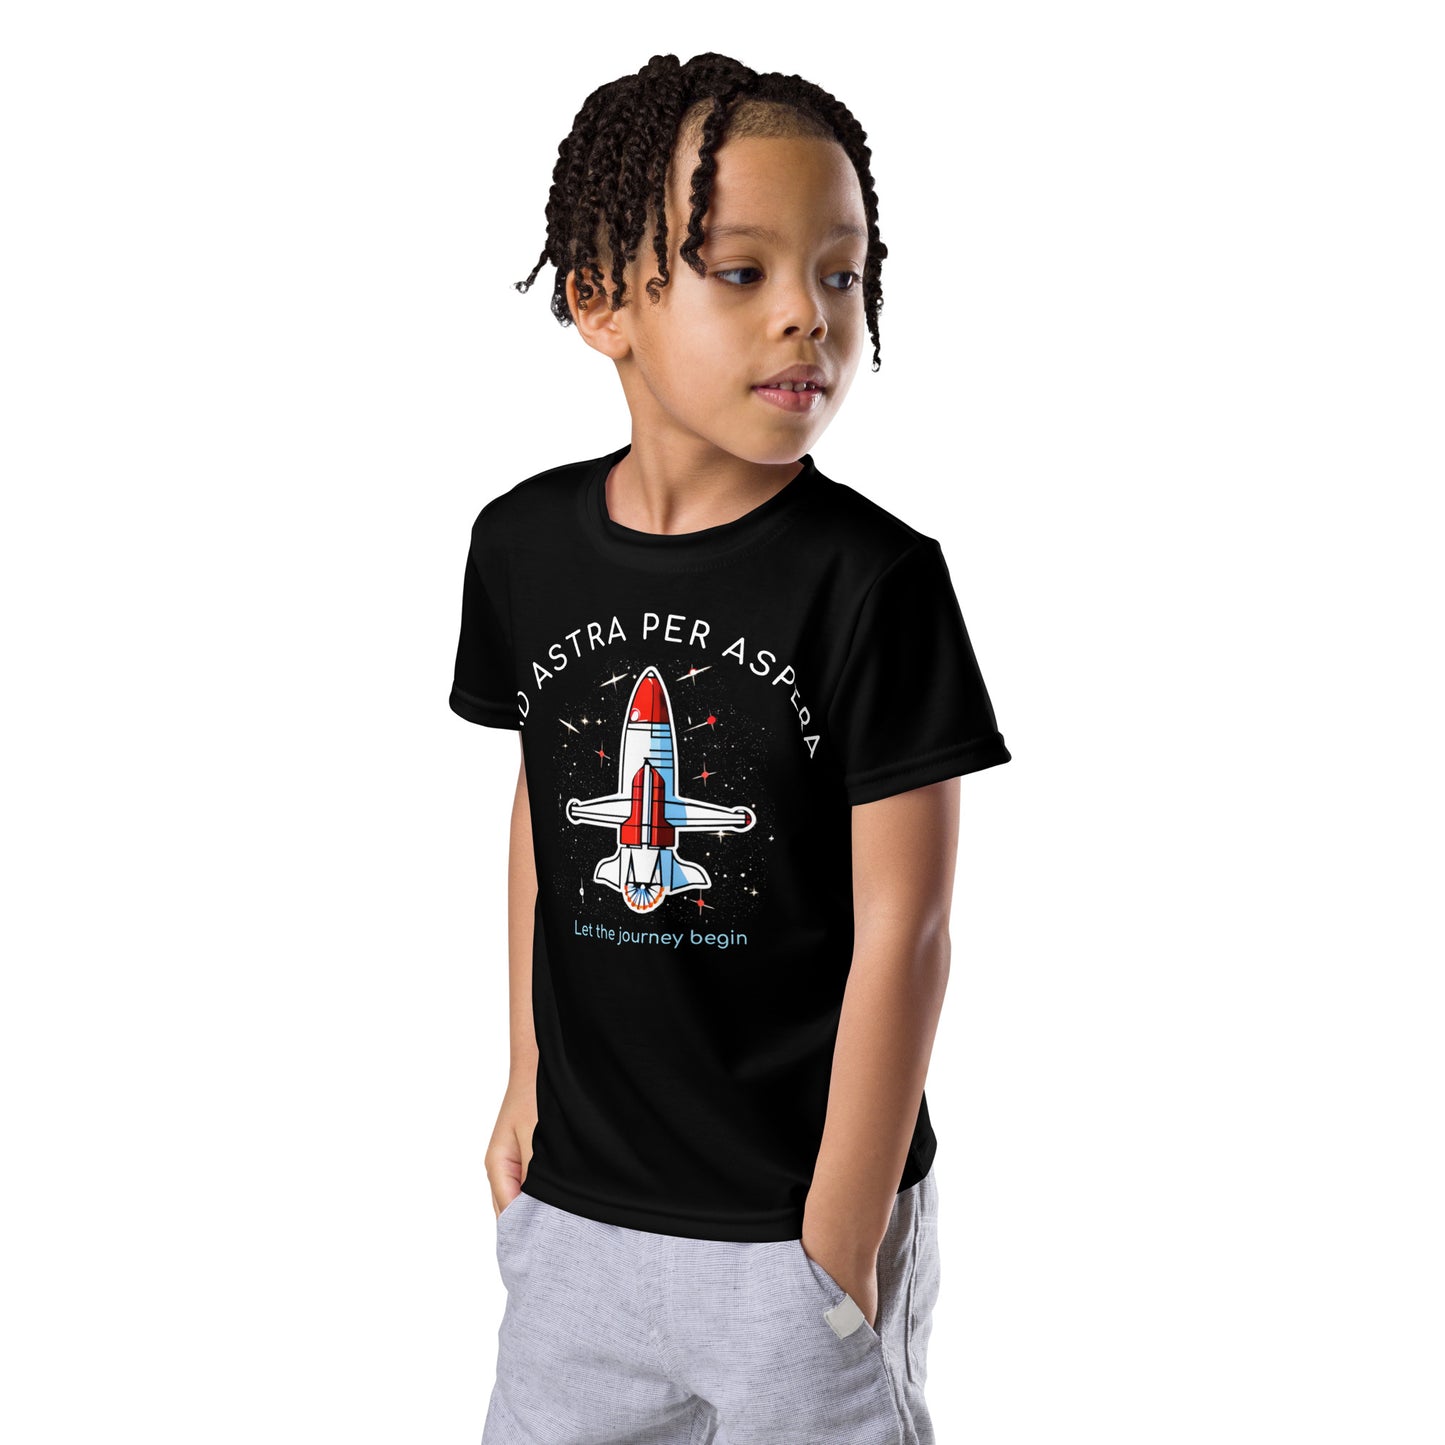 Kids T-shirt Polyester Jersey - USS Valkyrie